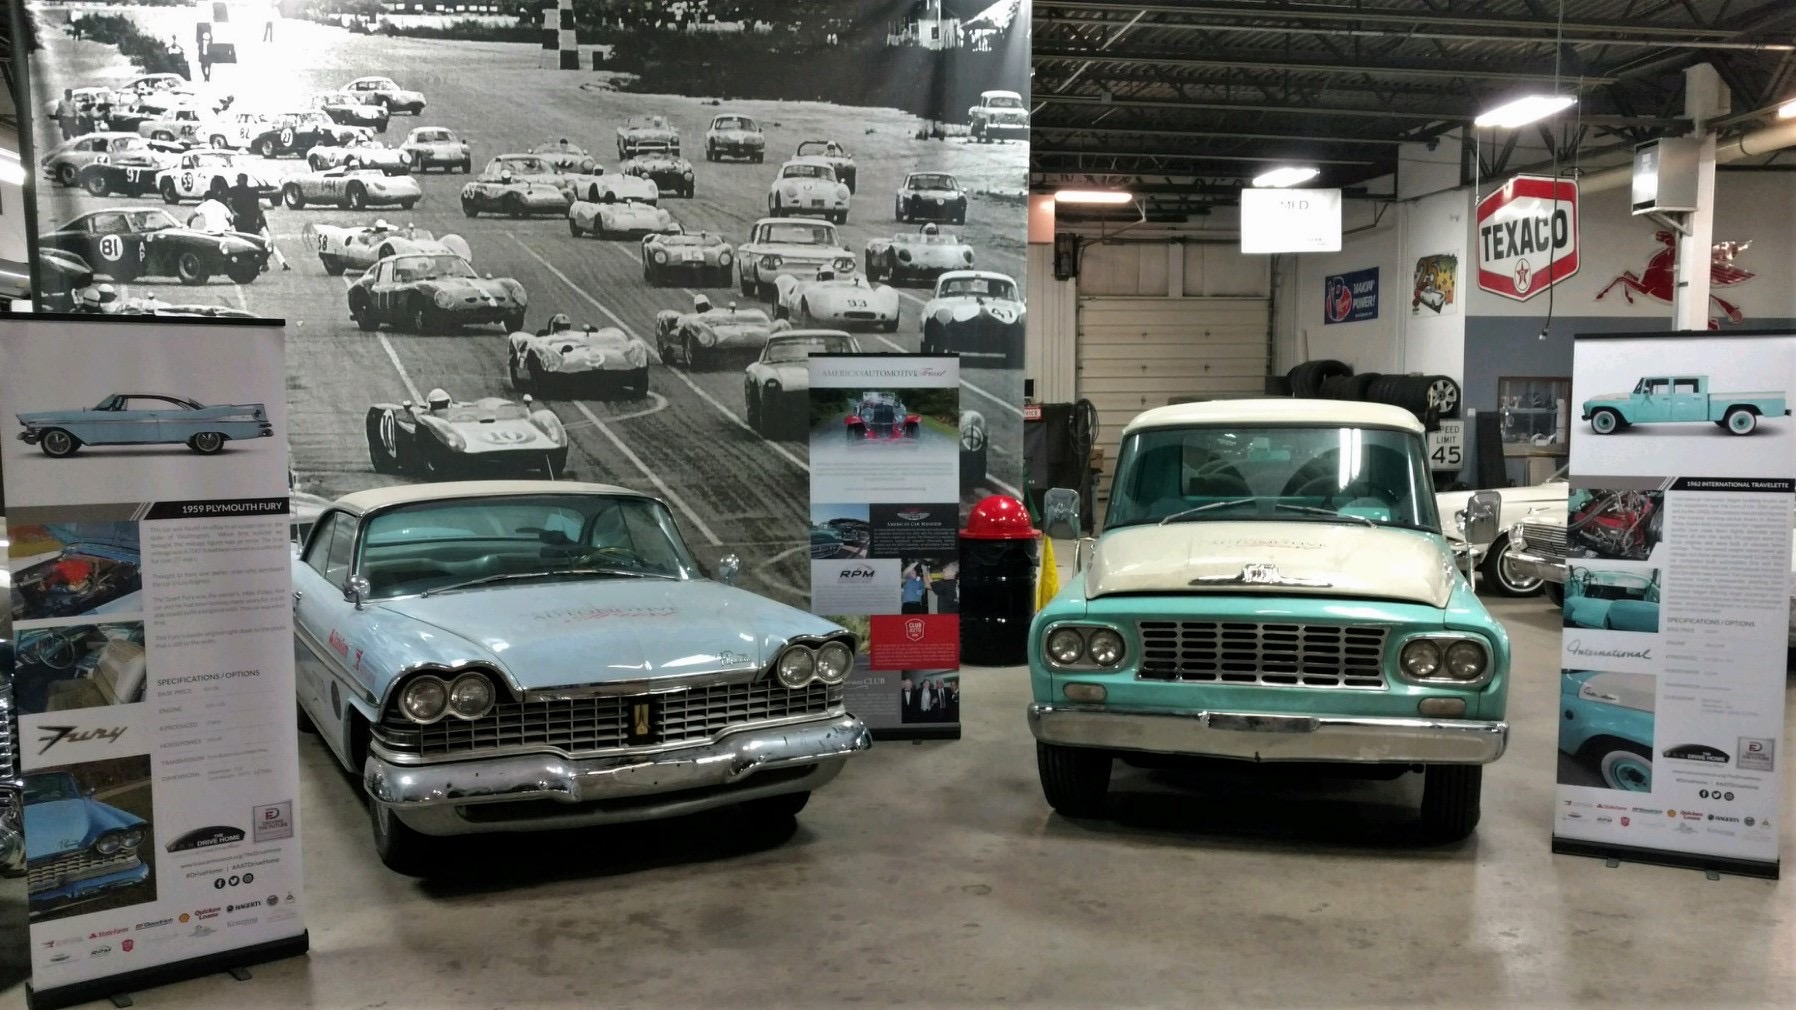 'Bullitt' Mustang hero car on display in Traverse City, Michigan | ClassicCar